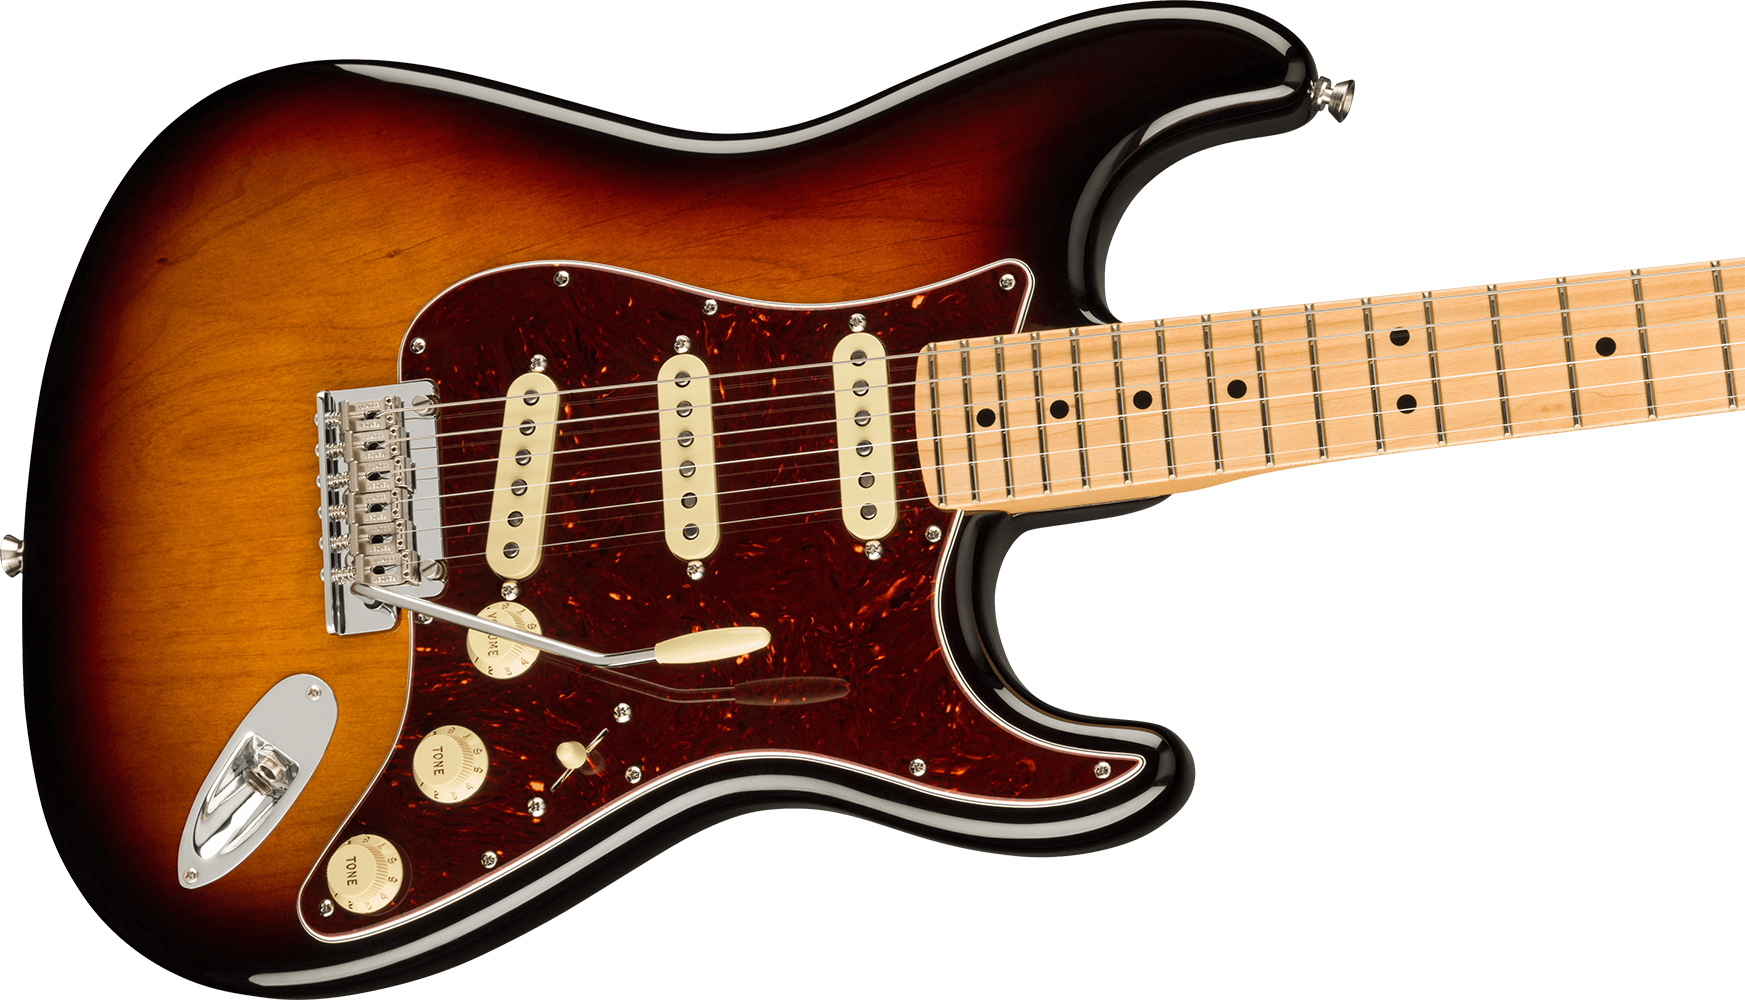 Fender American Professional II- rolled fretboard edges